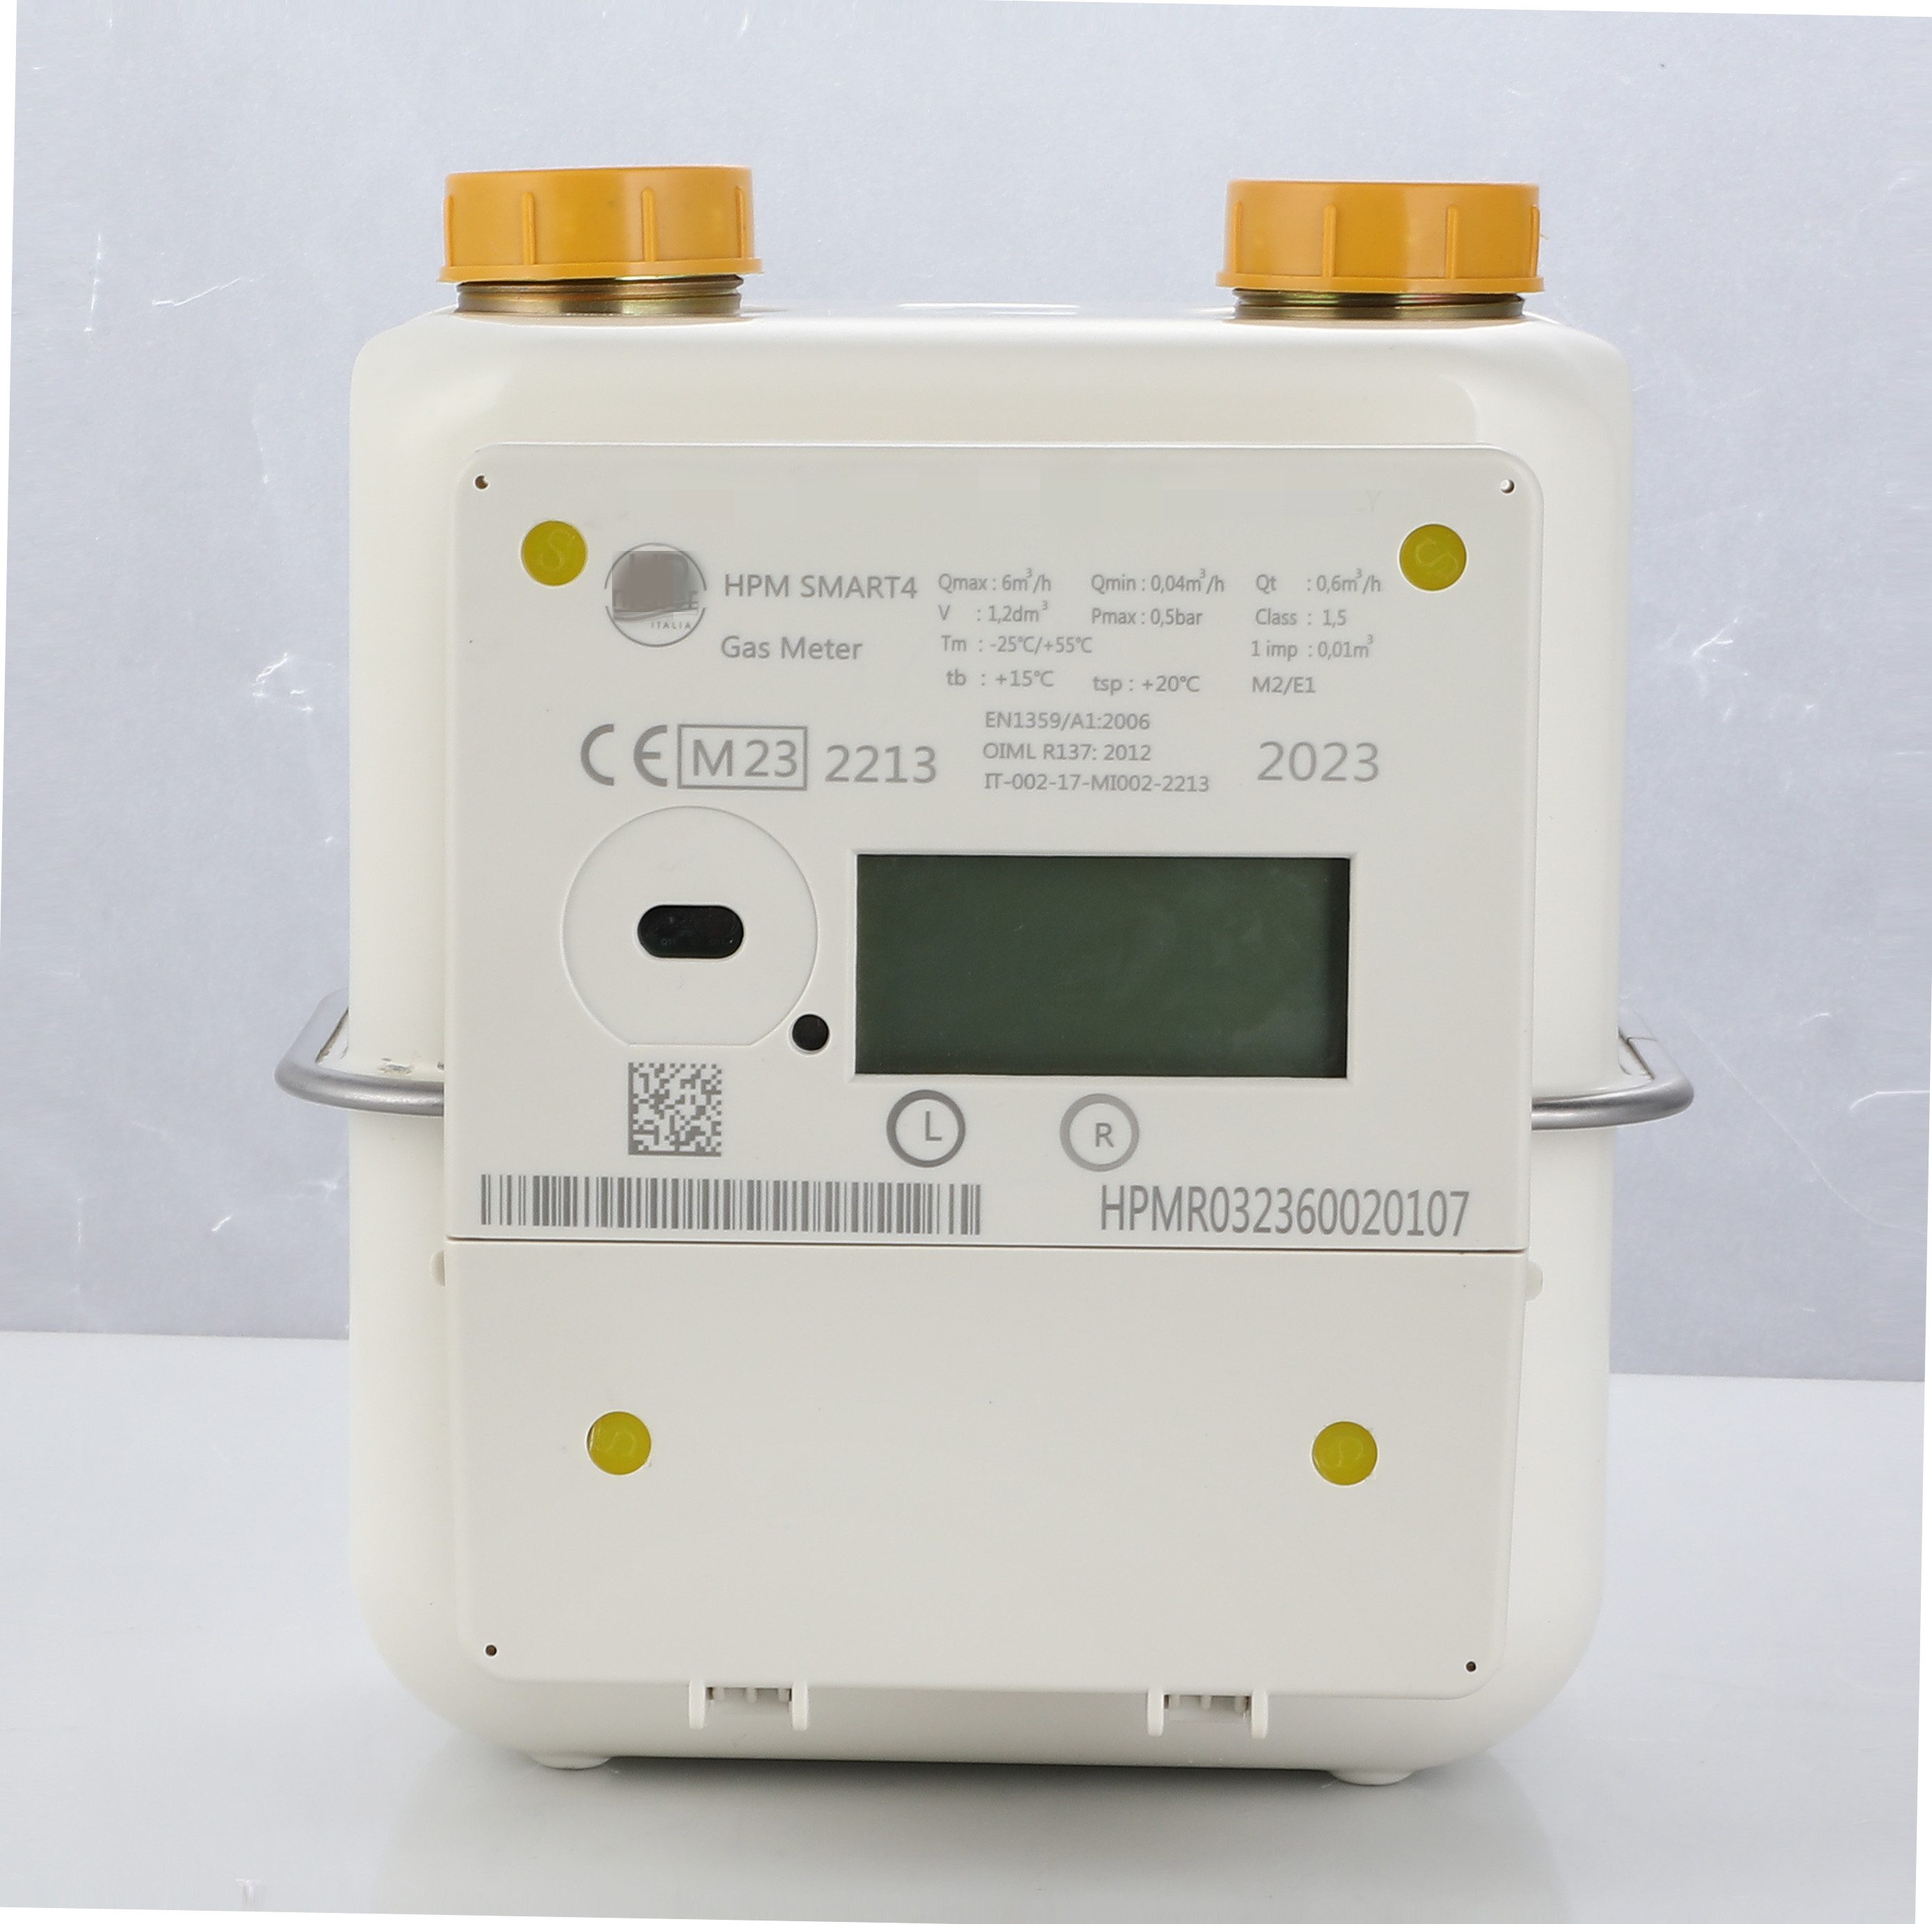 GPRS smart gas meter